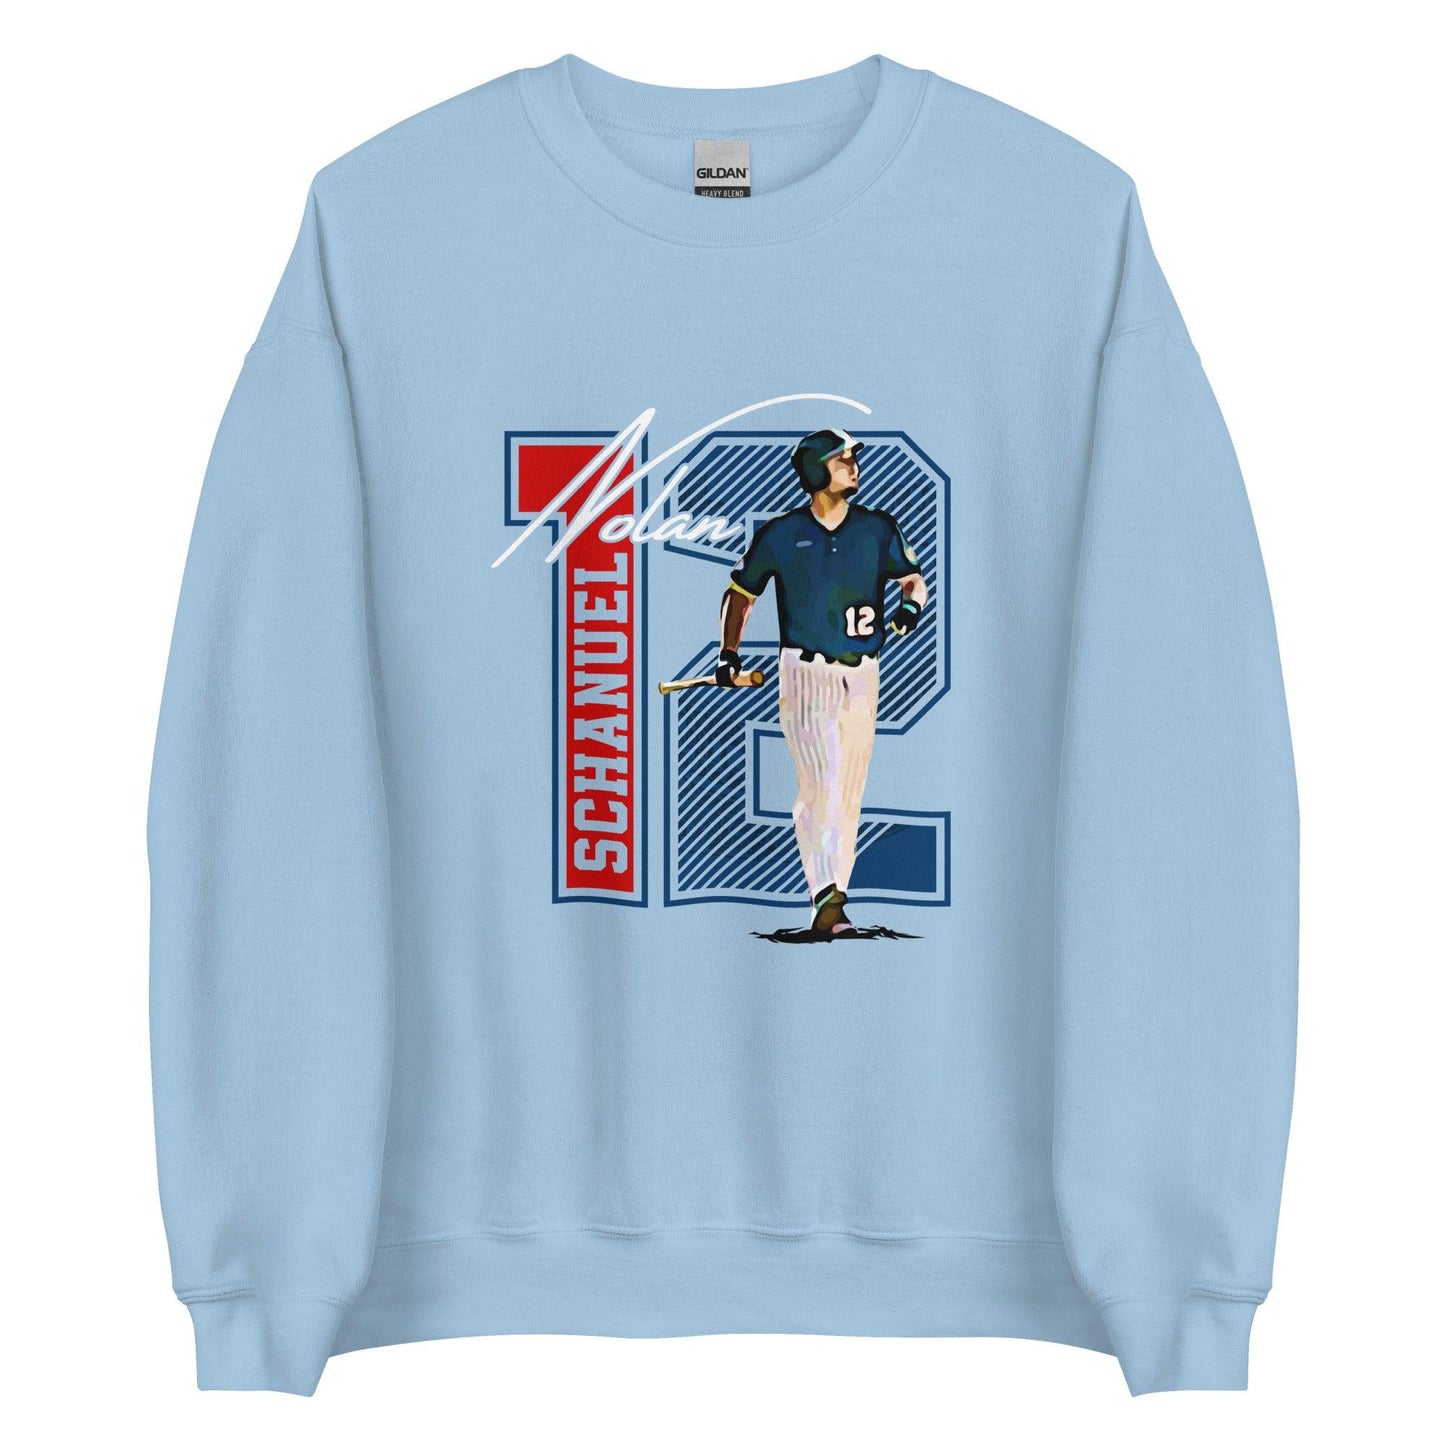 Nolan Schanuel “Essential” Sweatshirt - Fan Arch